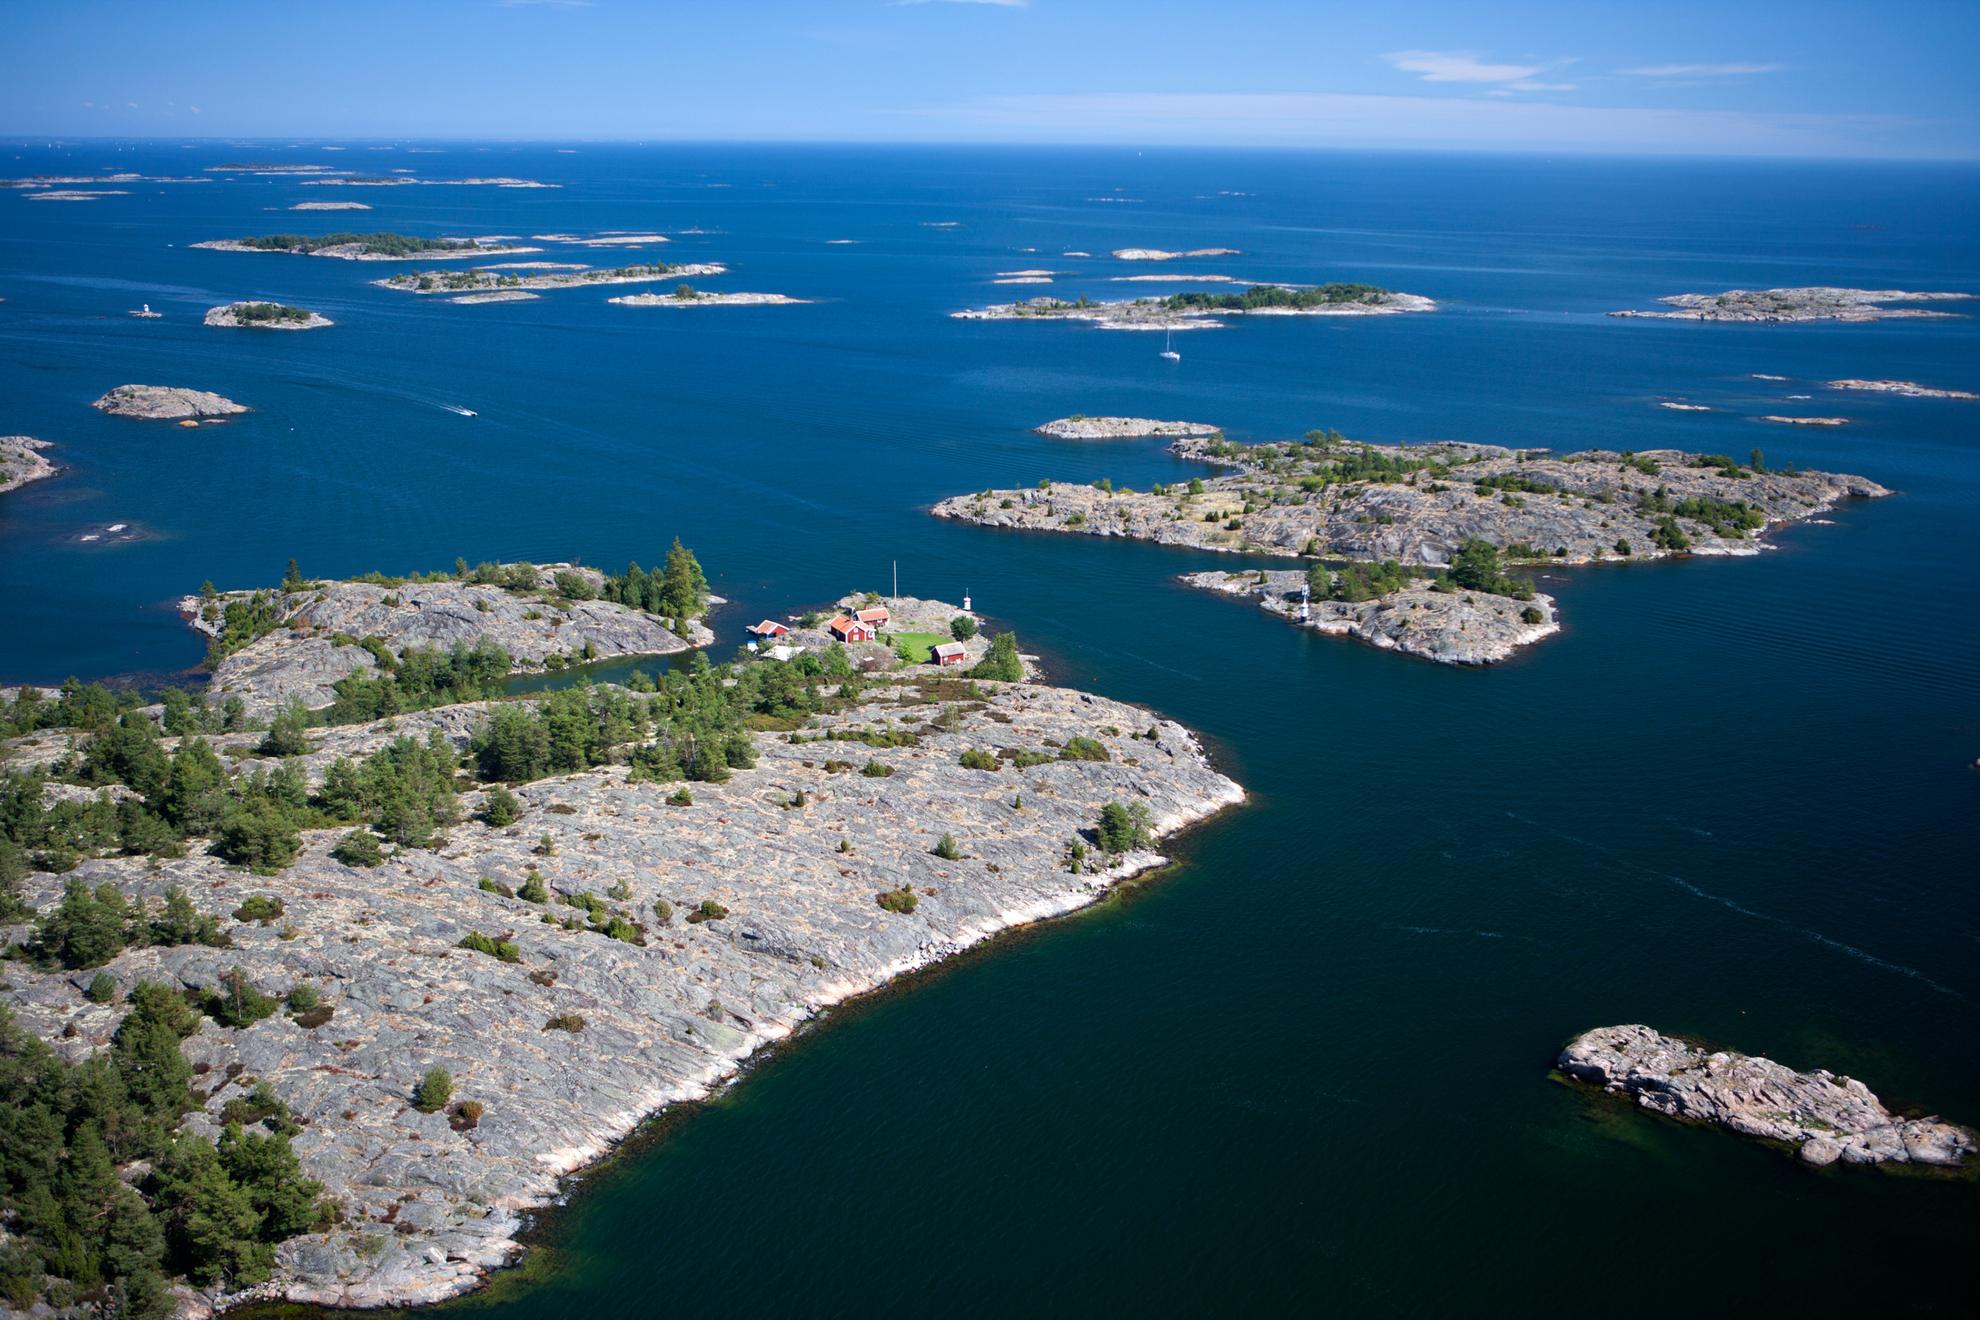 An aerial view of the Sankt Anna archipelago.